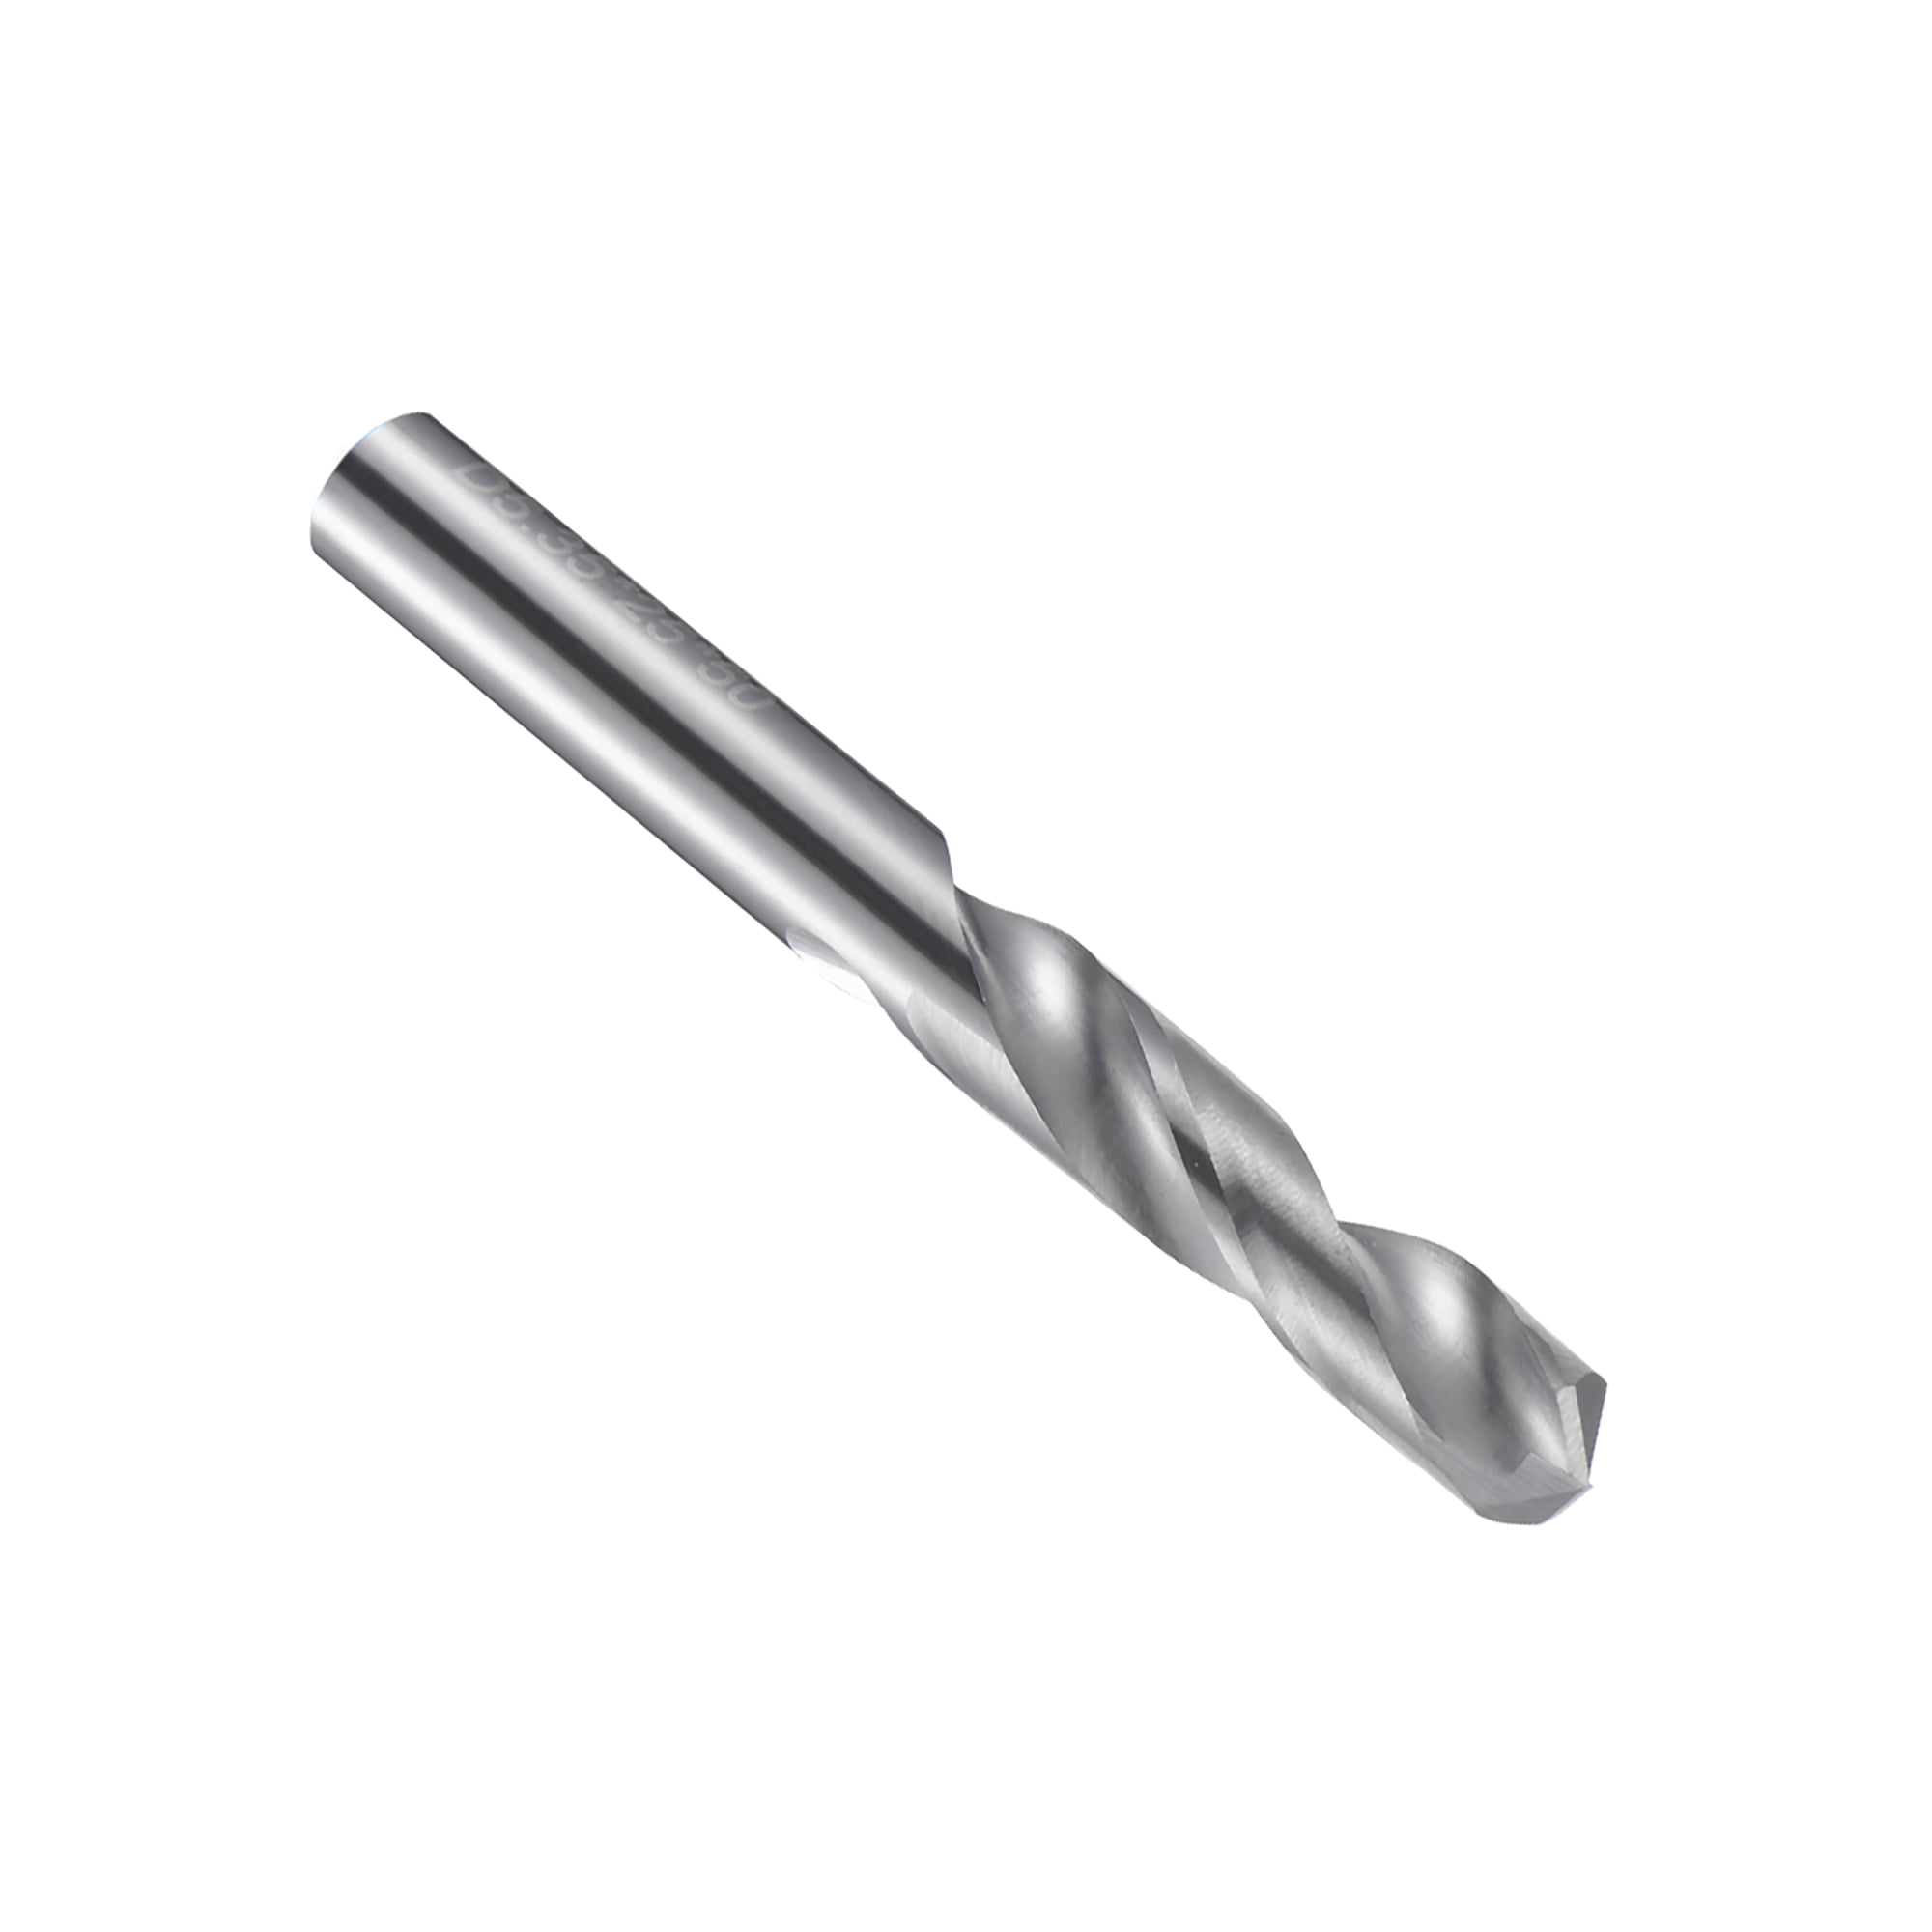 Twist Drill Bit 3mm 16mm Tungsten Steel Alloy Bits Stainless Steel Special